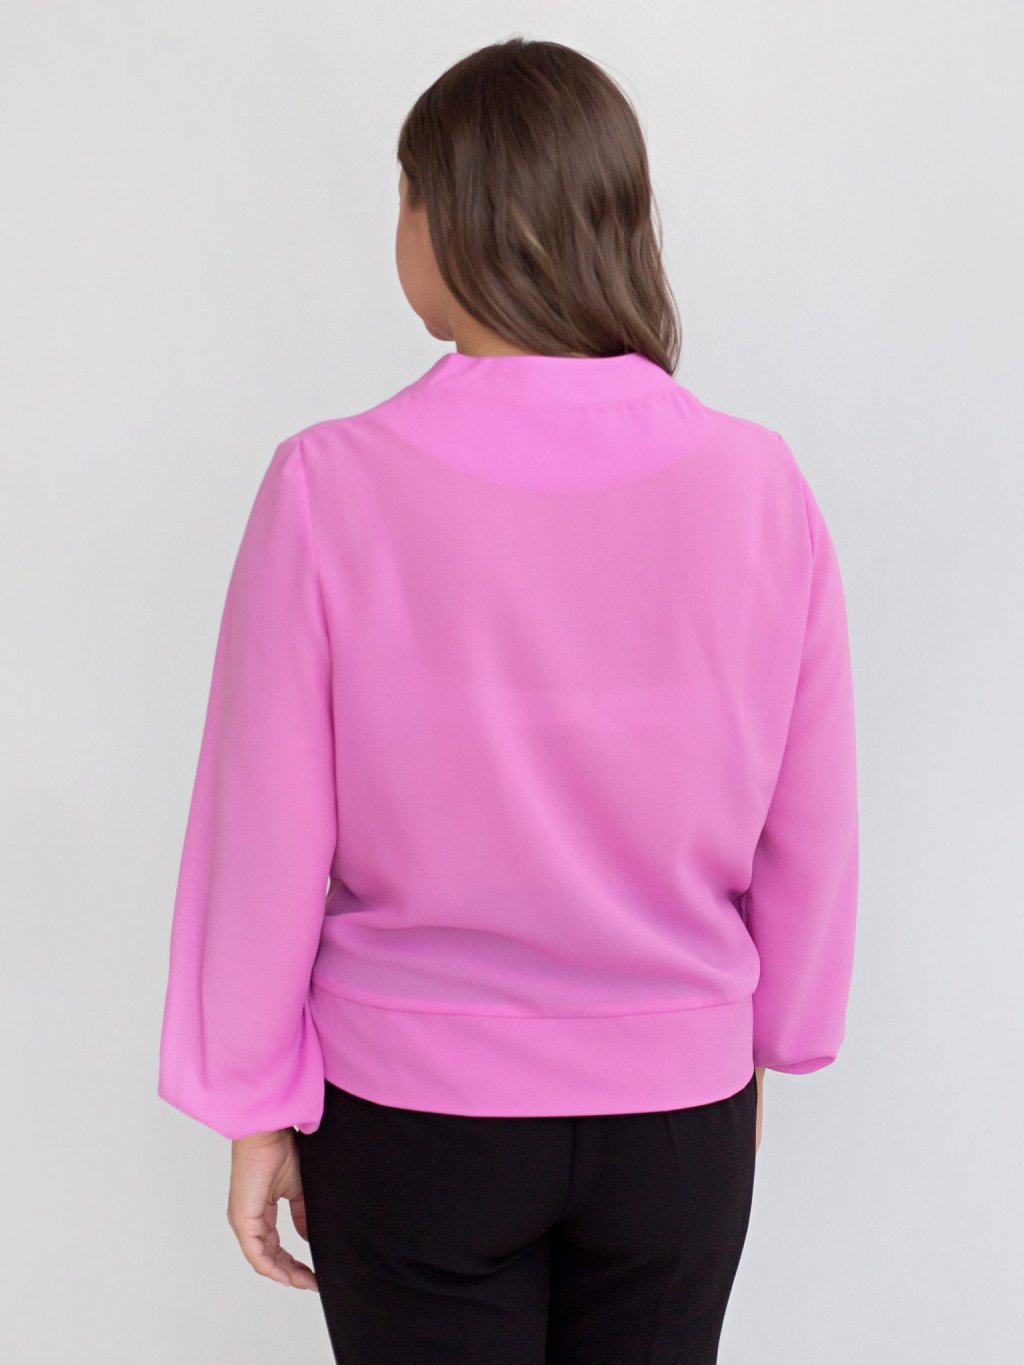 Блузка из креп шифона цвет розовый (Б-111-3) - 3